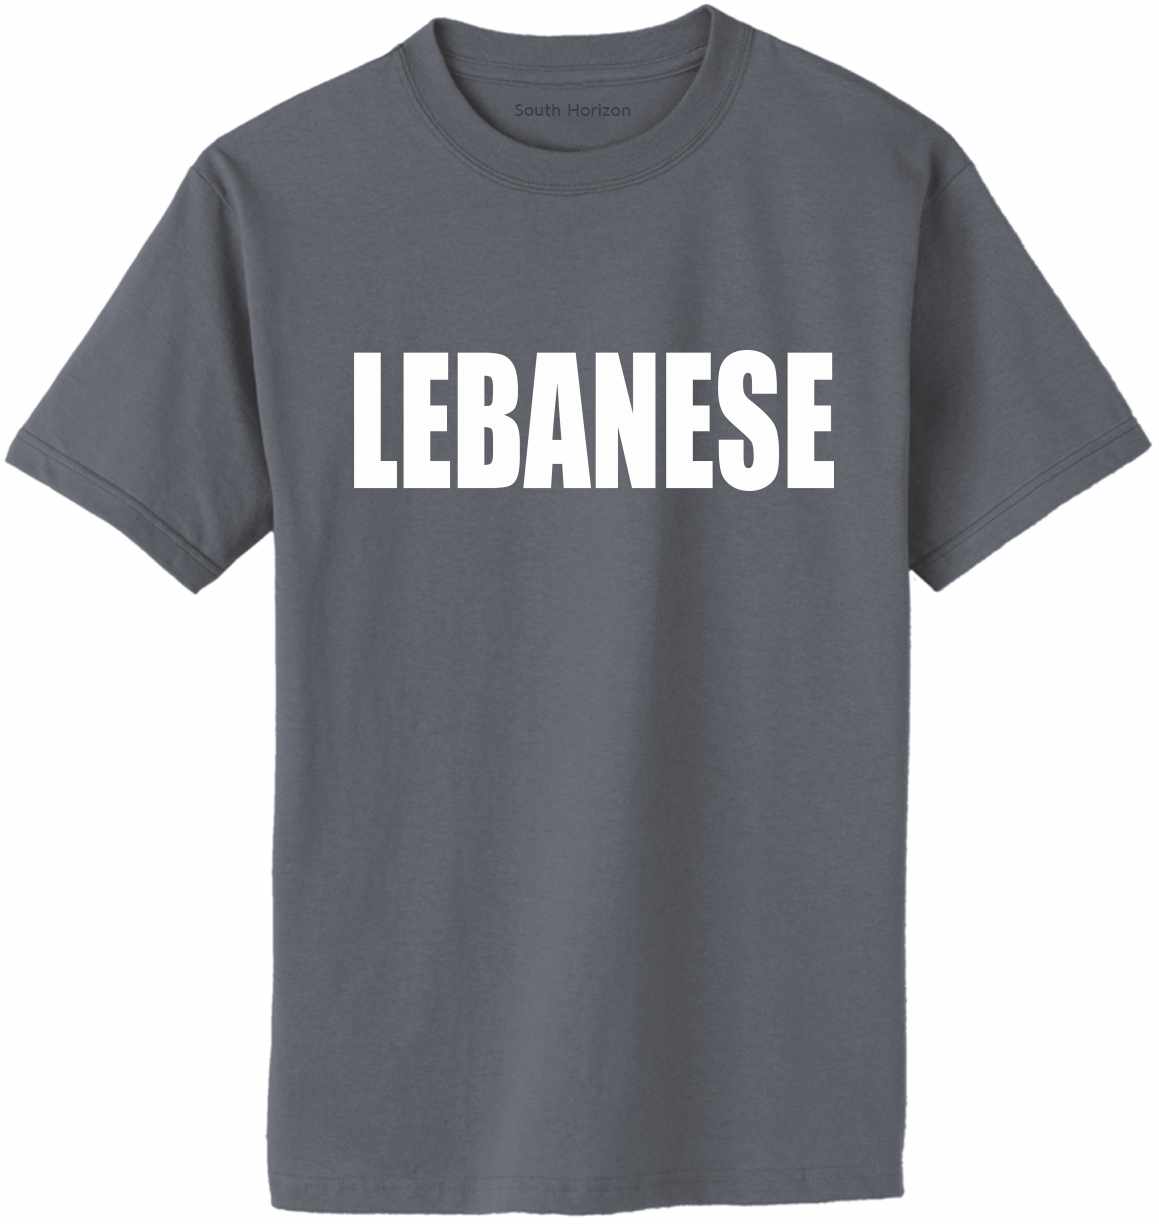 LEBANESE on Adult T-Shirt (#843-1)